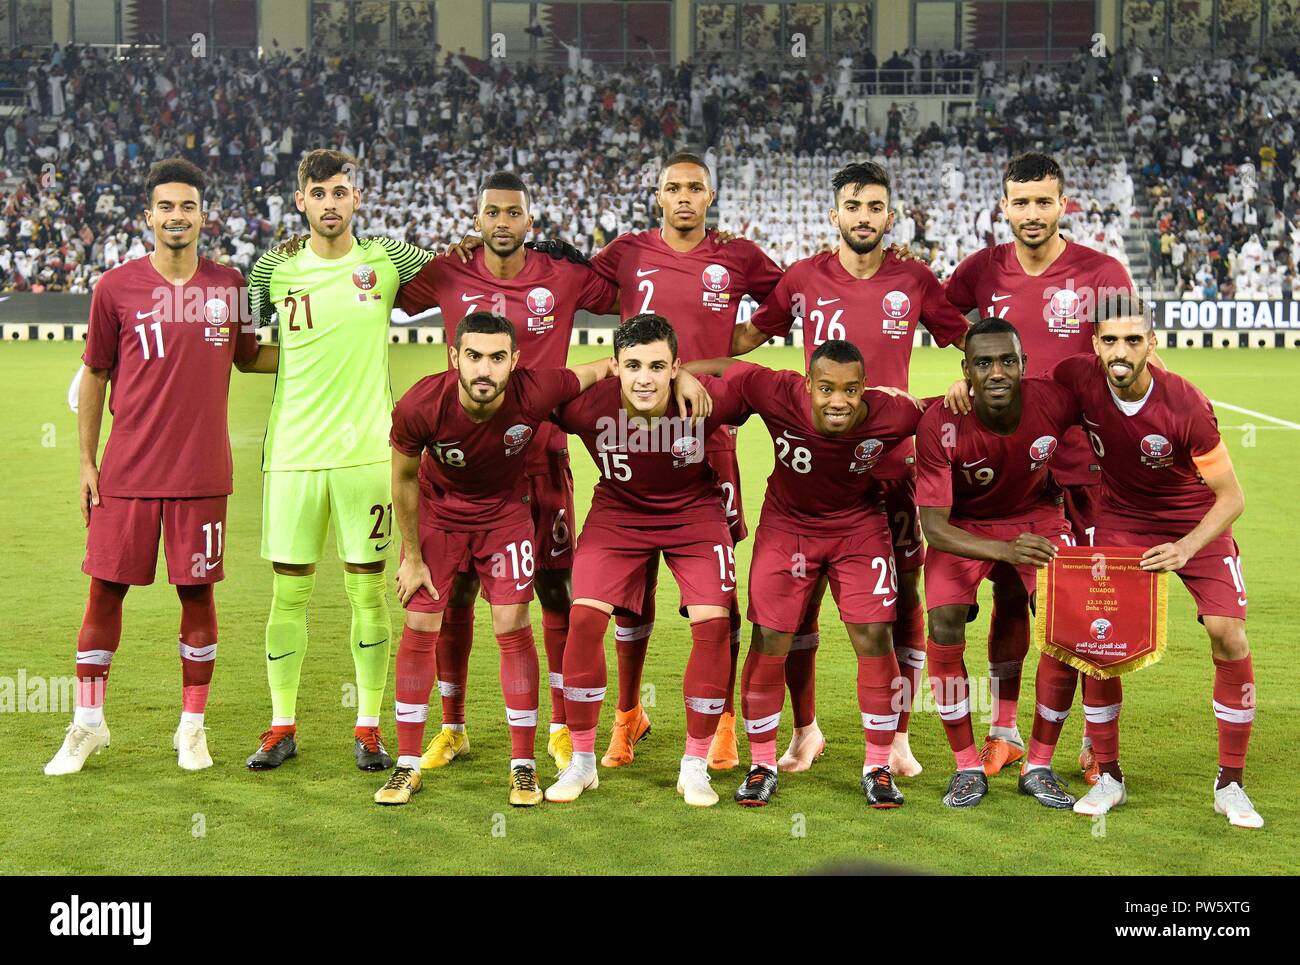 Doha, Qatar. 12th Oct, 2018. Qatar soccer team line up prior to an international friendly soccer match between Qatar and Ecuador in Doha, Qatar, Oct. 12, 2018. Qatar won 4-3. Credit: Nikku/Xinhua/Alamy Live News Stock Photo